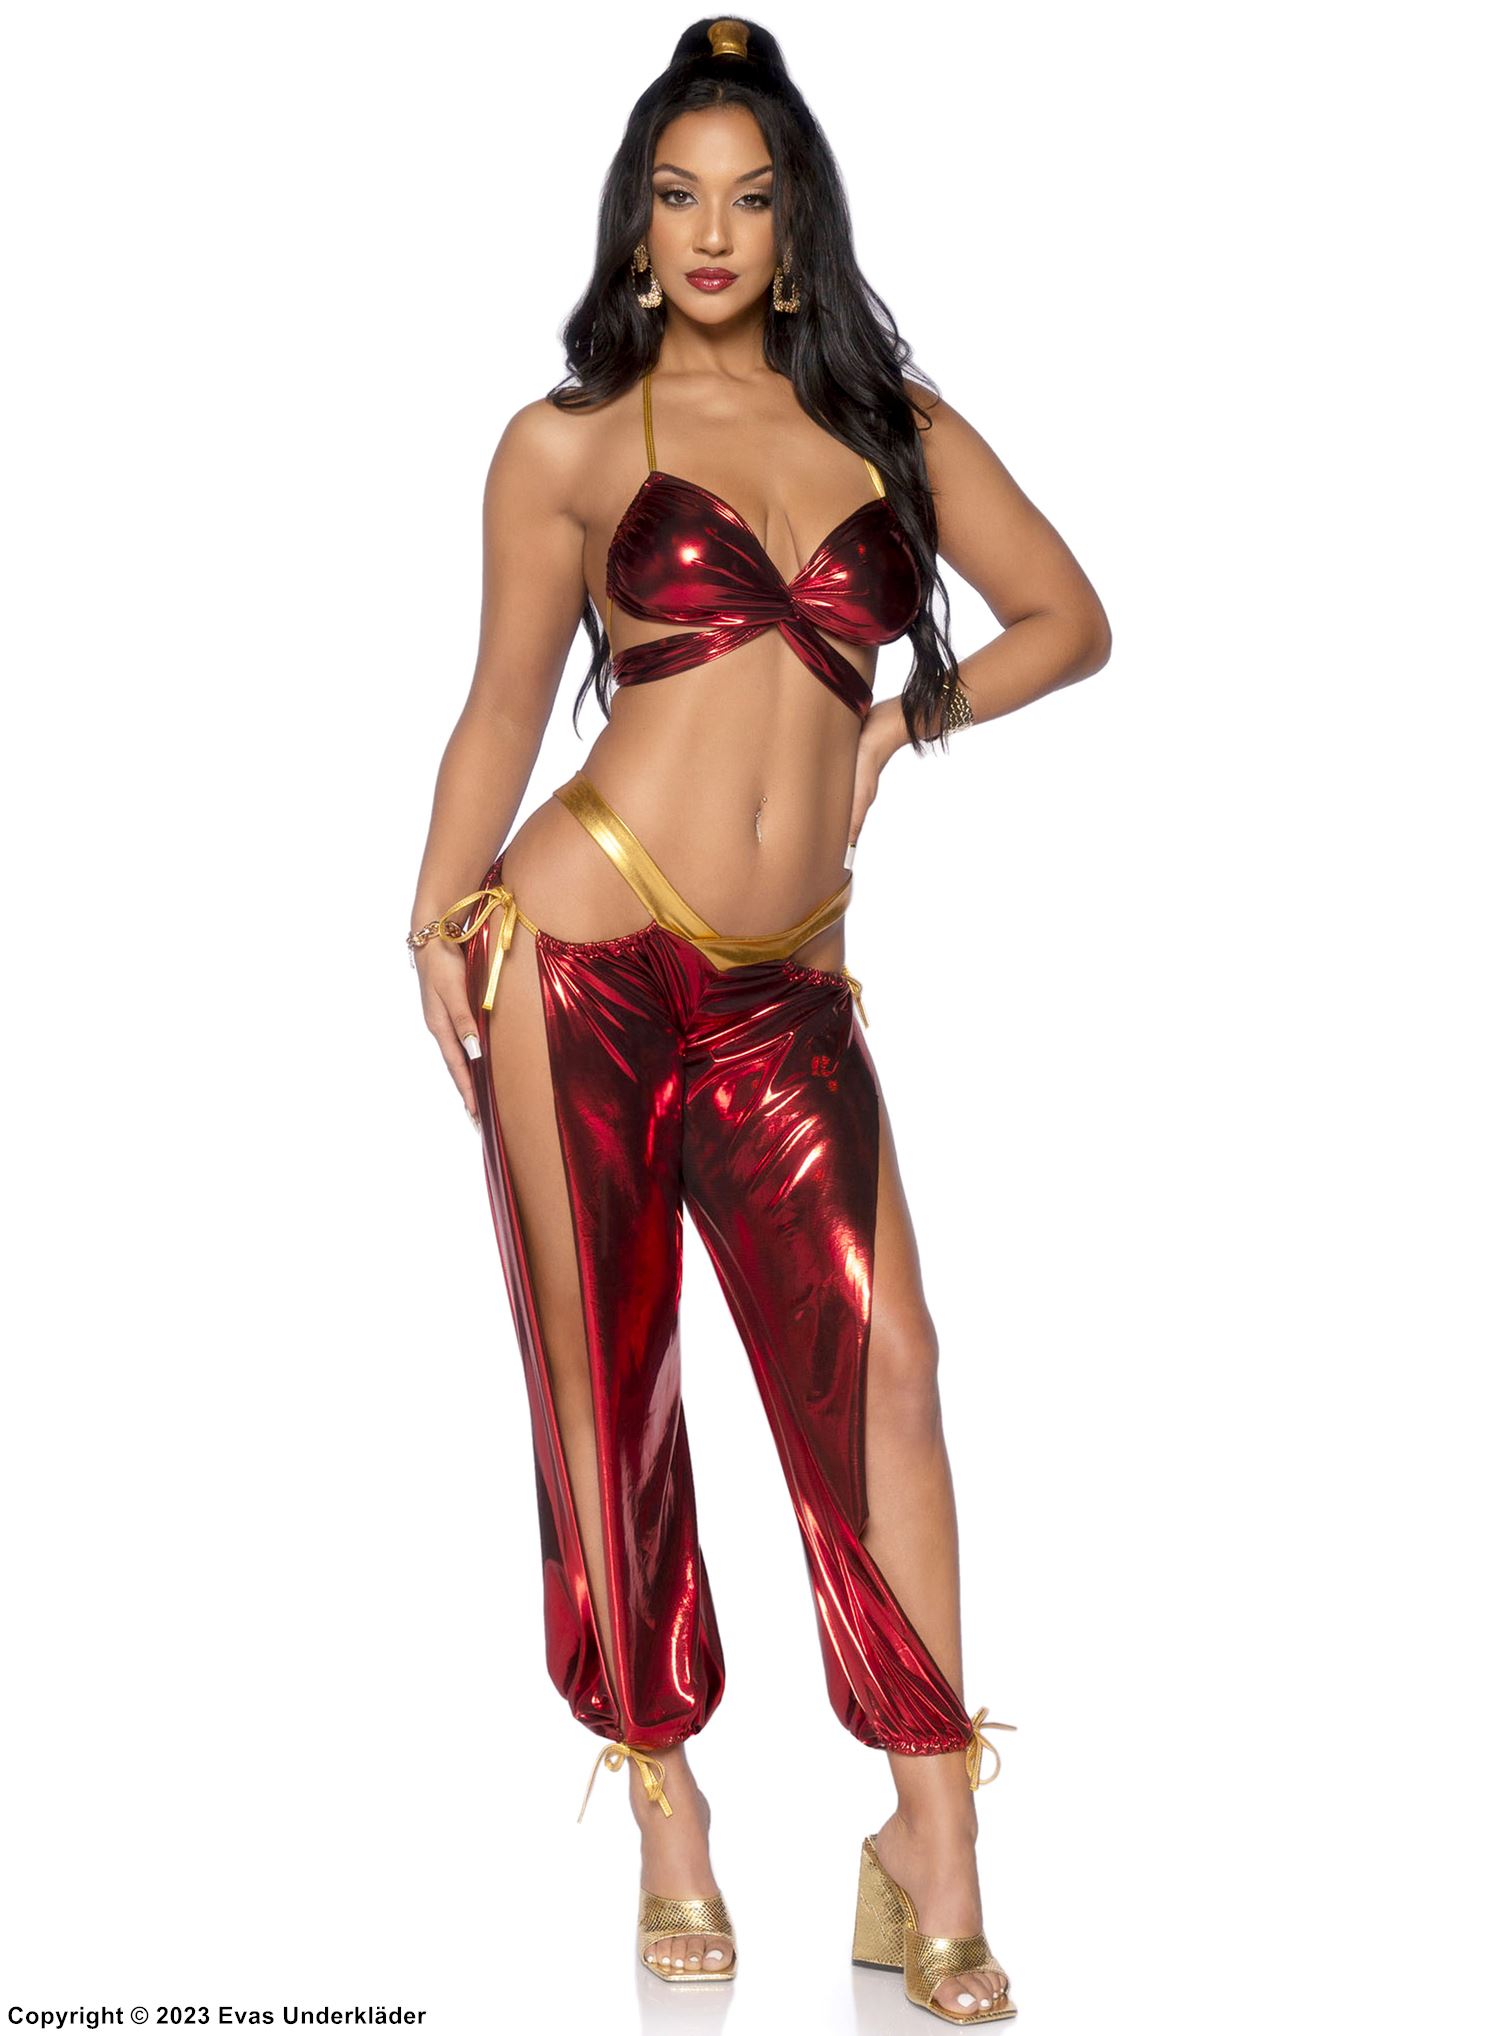 Princess Jasmine from Aladdin, costume top and pants, iridescent fabric, high slit